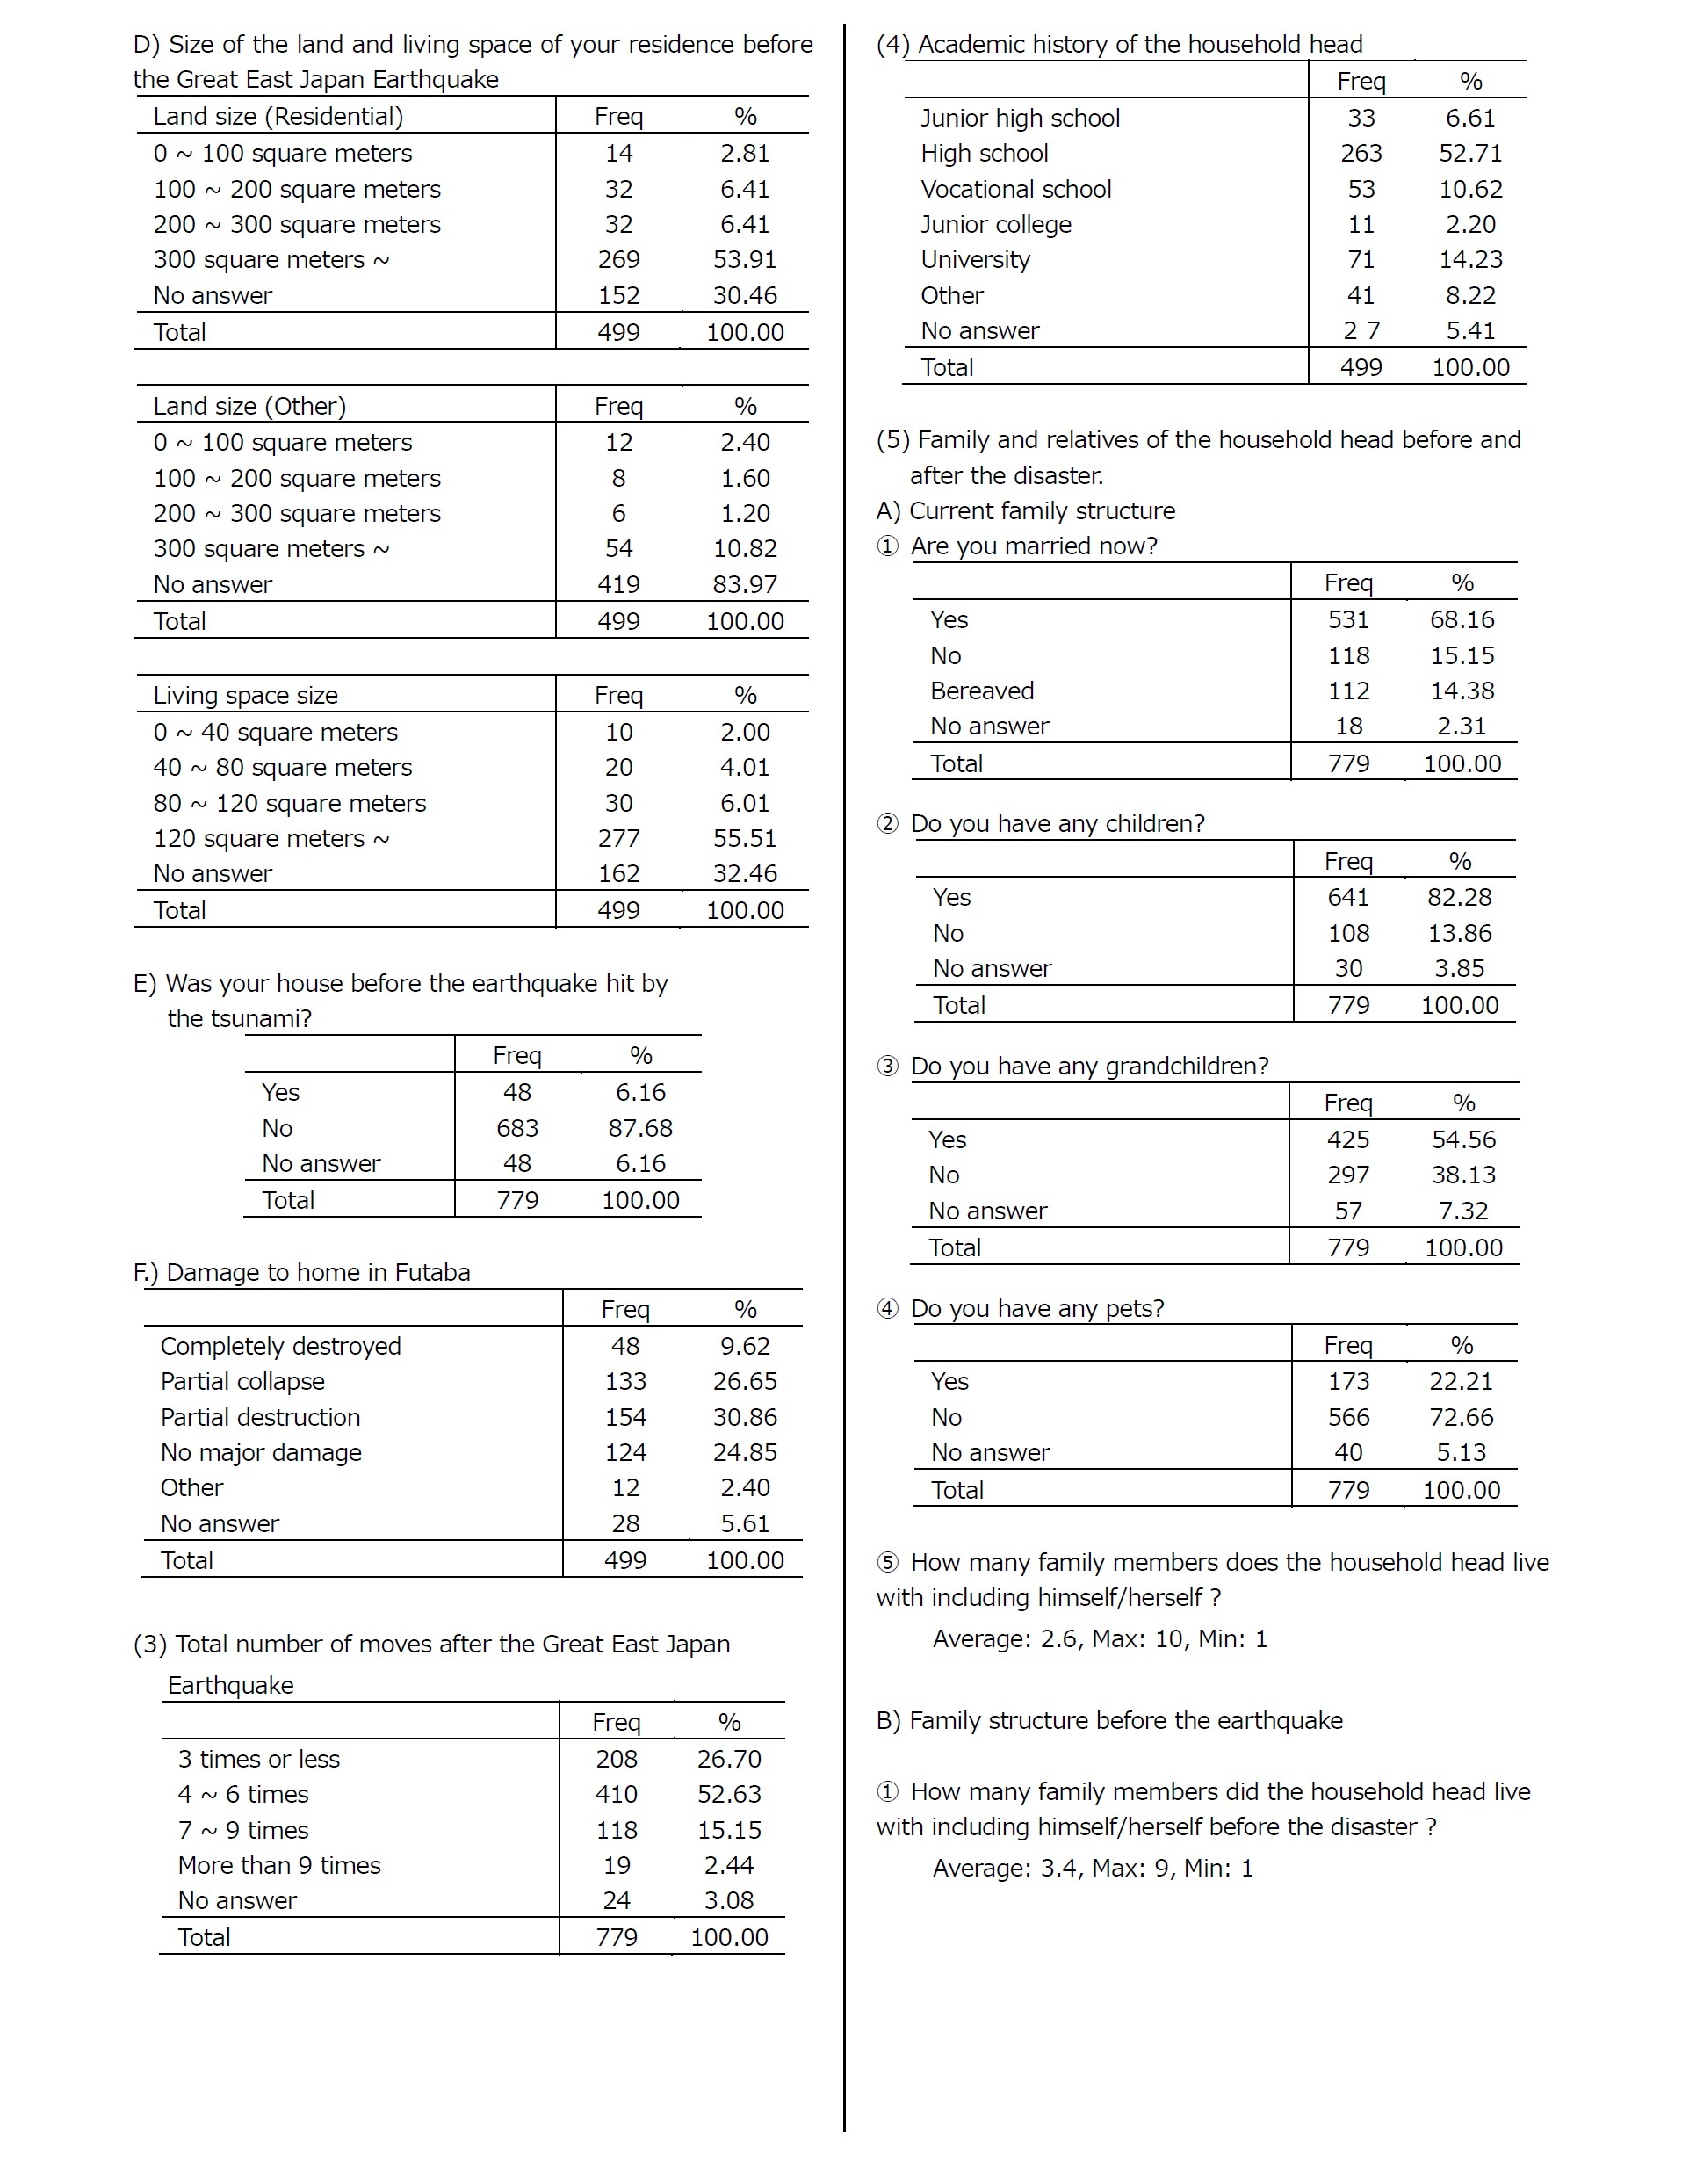 Appendix: Summary Tables2